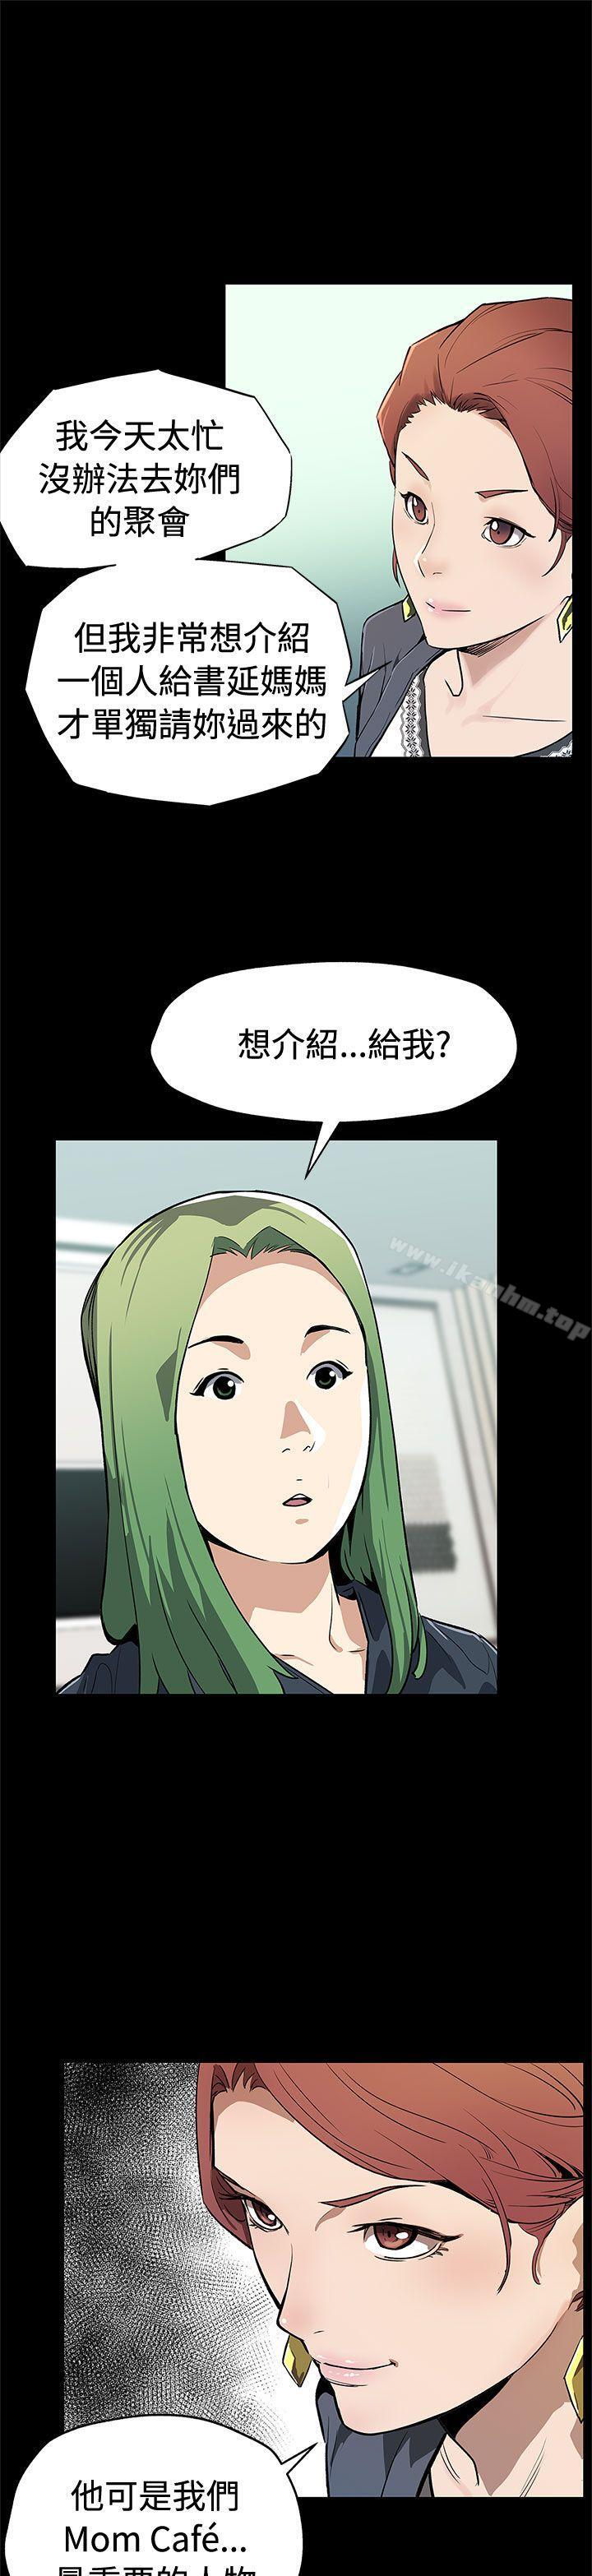 韩漫H漫画 Mom cafe  - 点击阅读 Mom cafe 后记 20